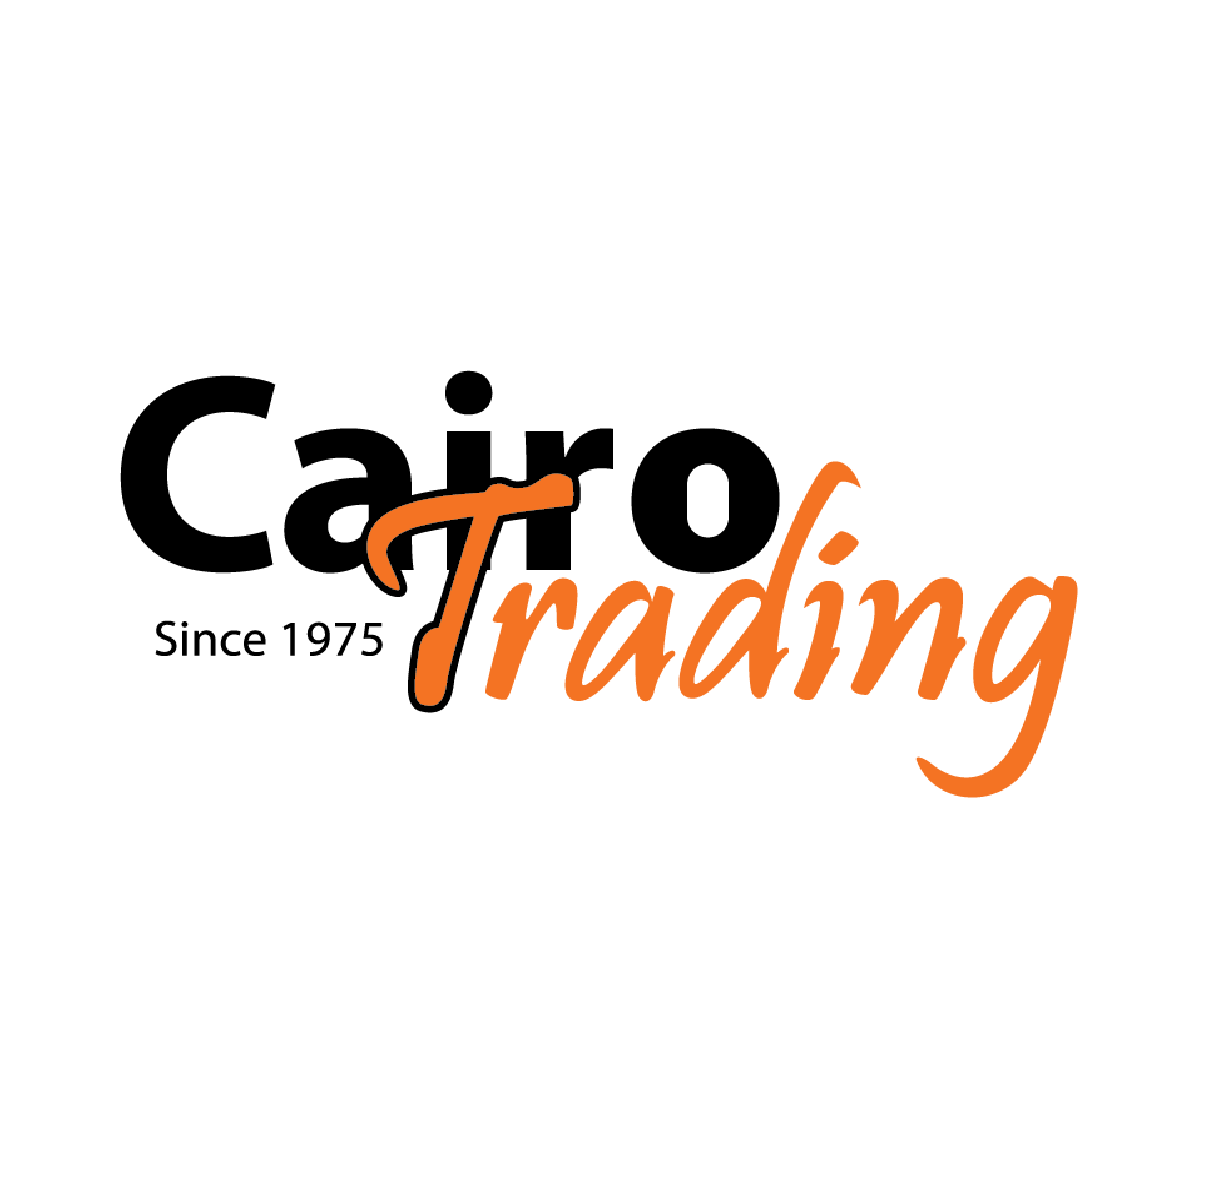 cairo Trading